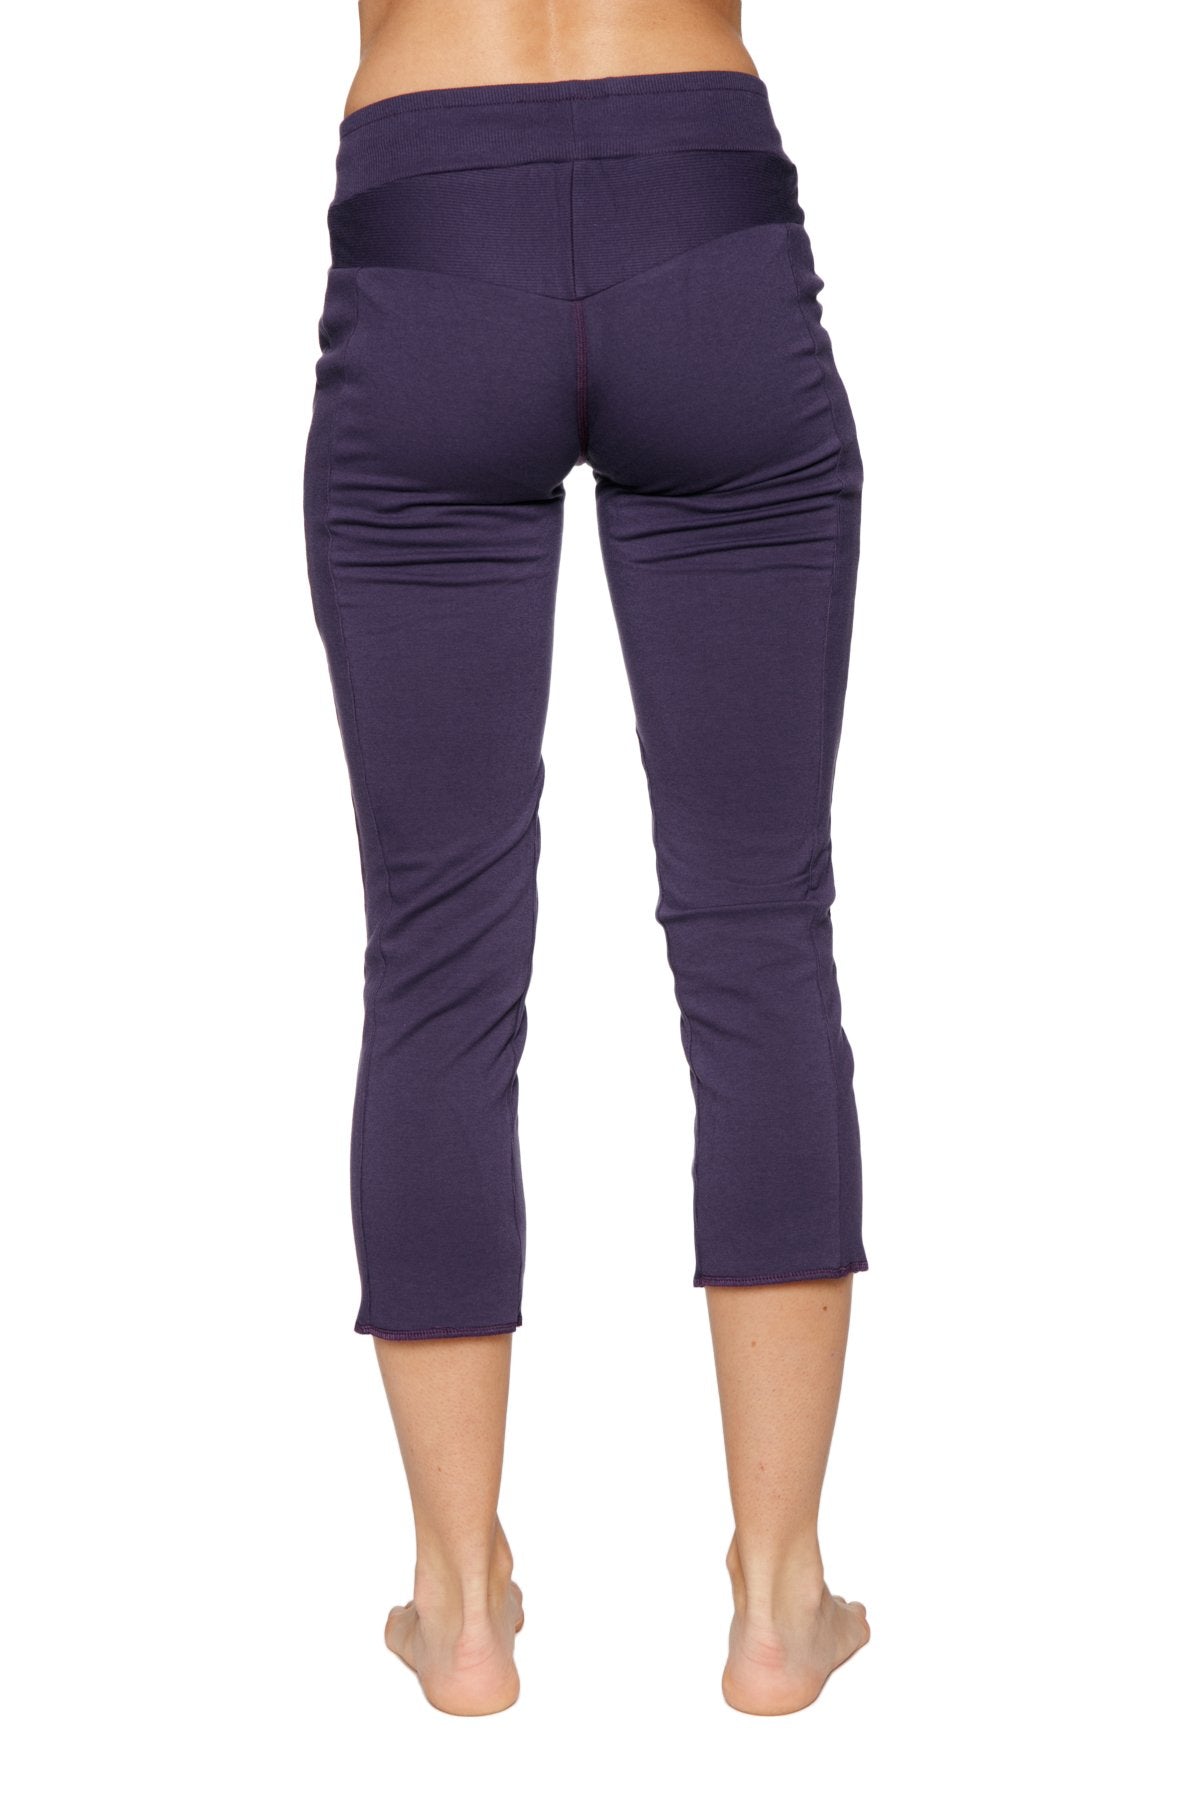 Women's 4/5 Length Zipper Pocket Capri Yoga Pant (Eggplant) by 4-rth